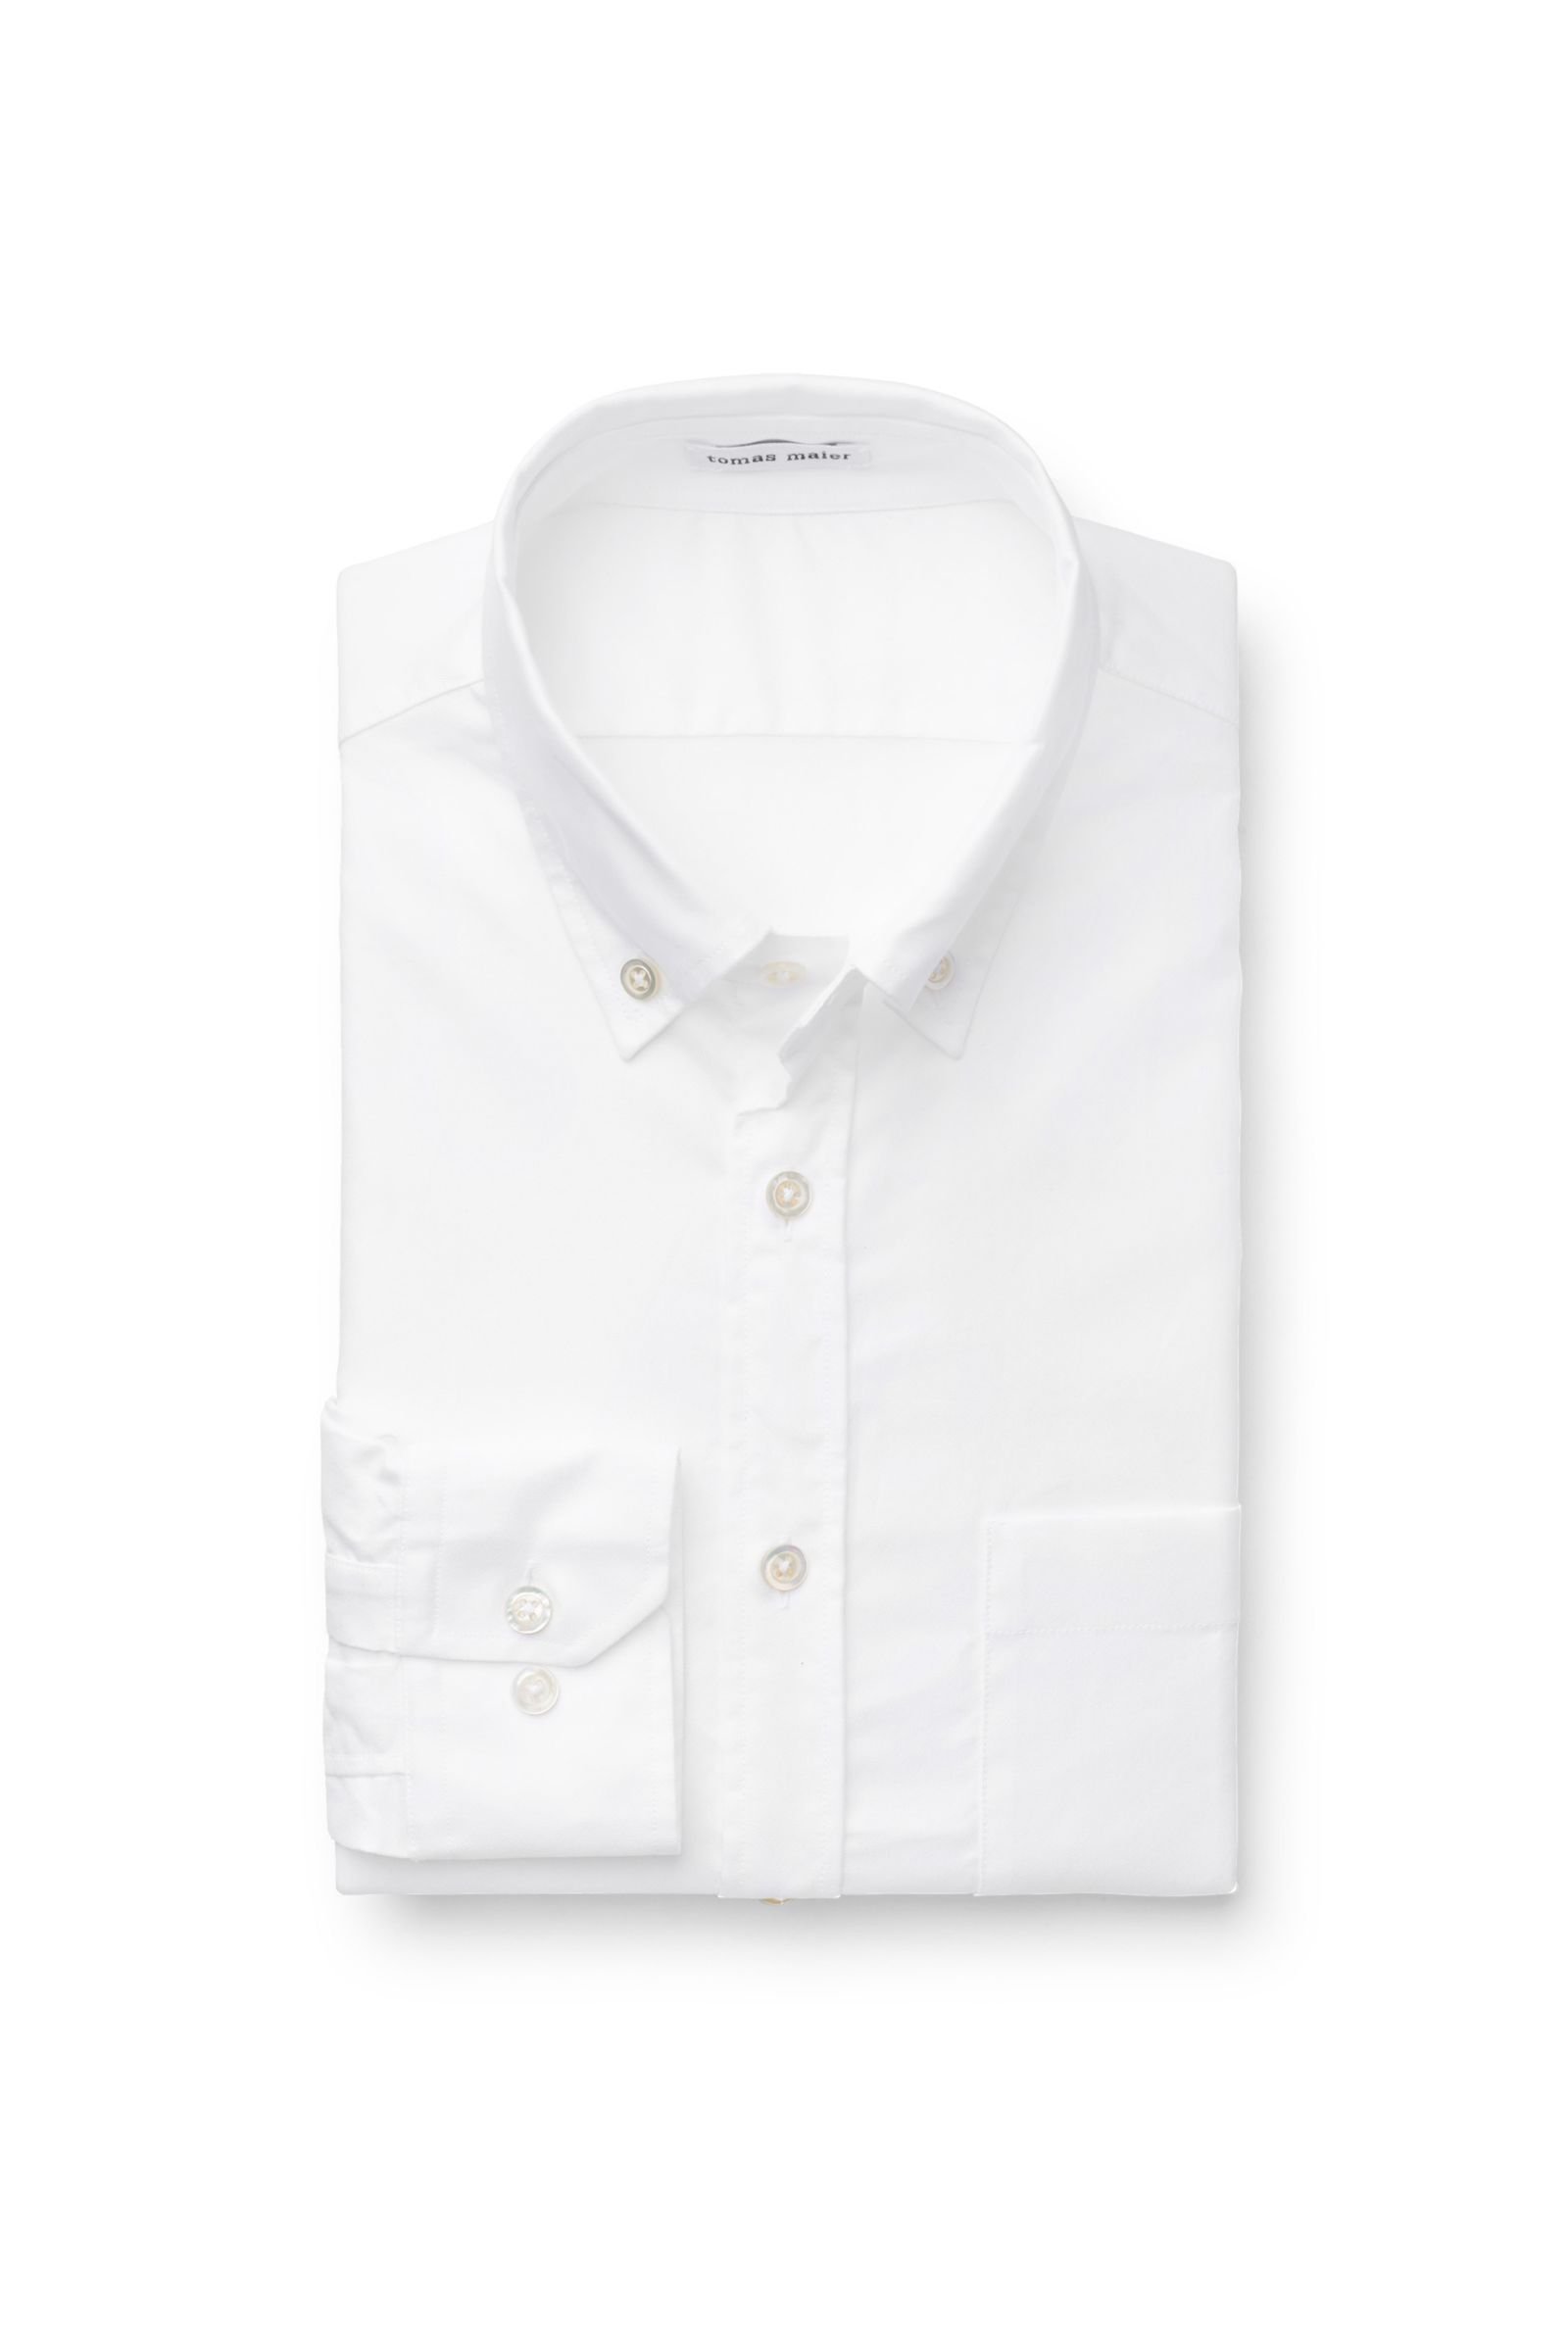 Oxford shirt button-down collar white